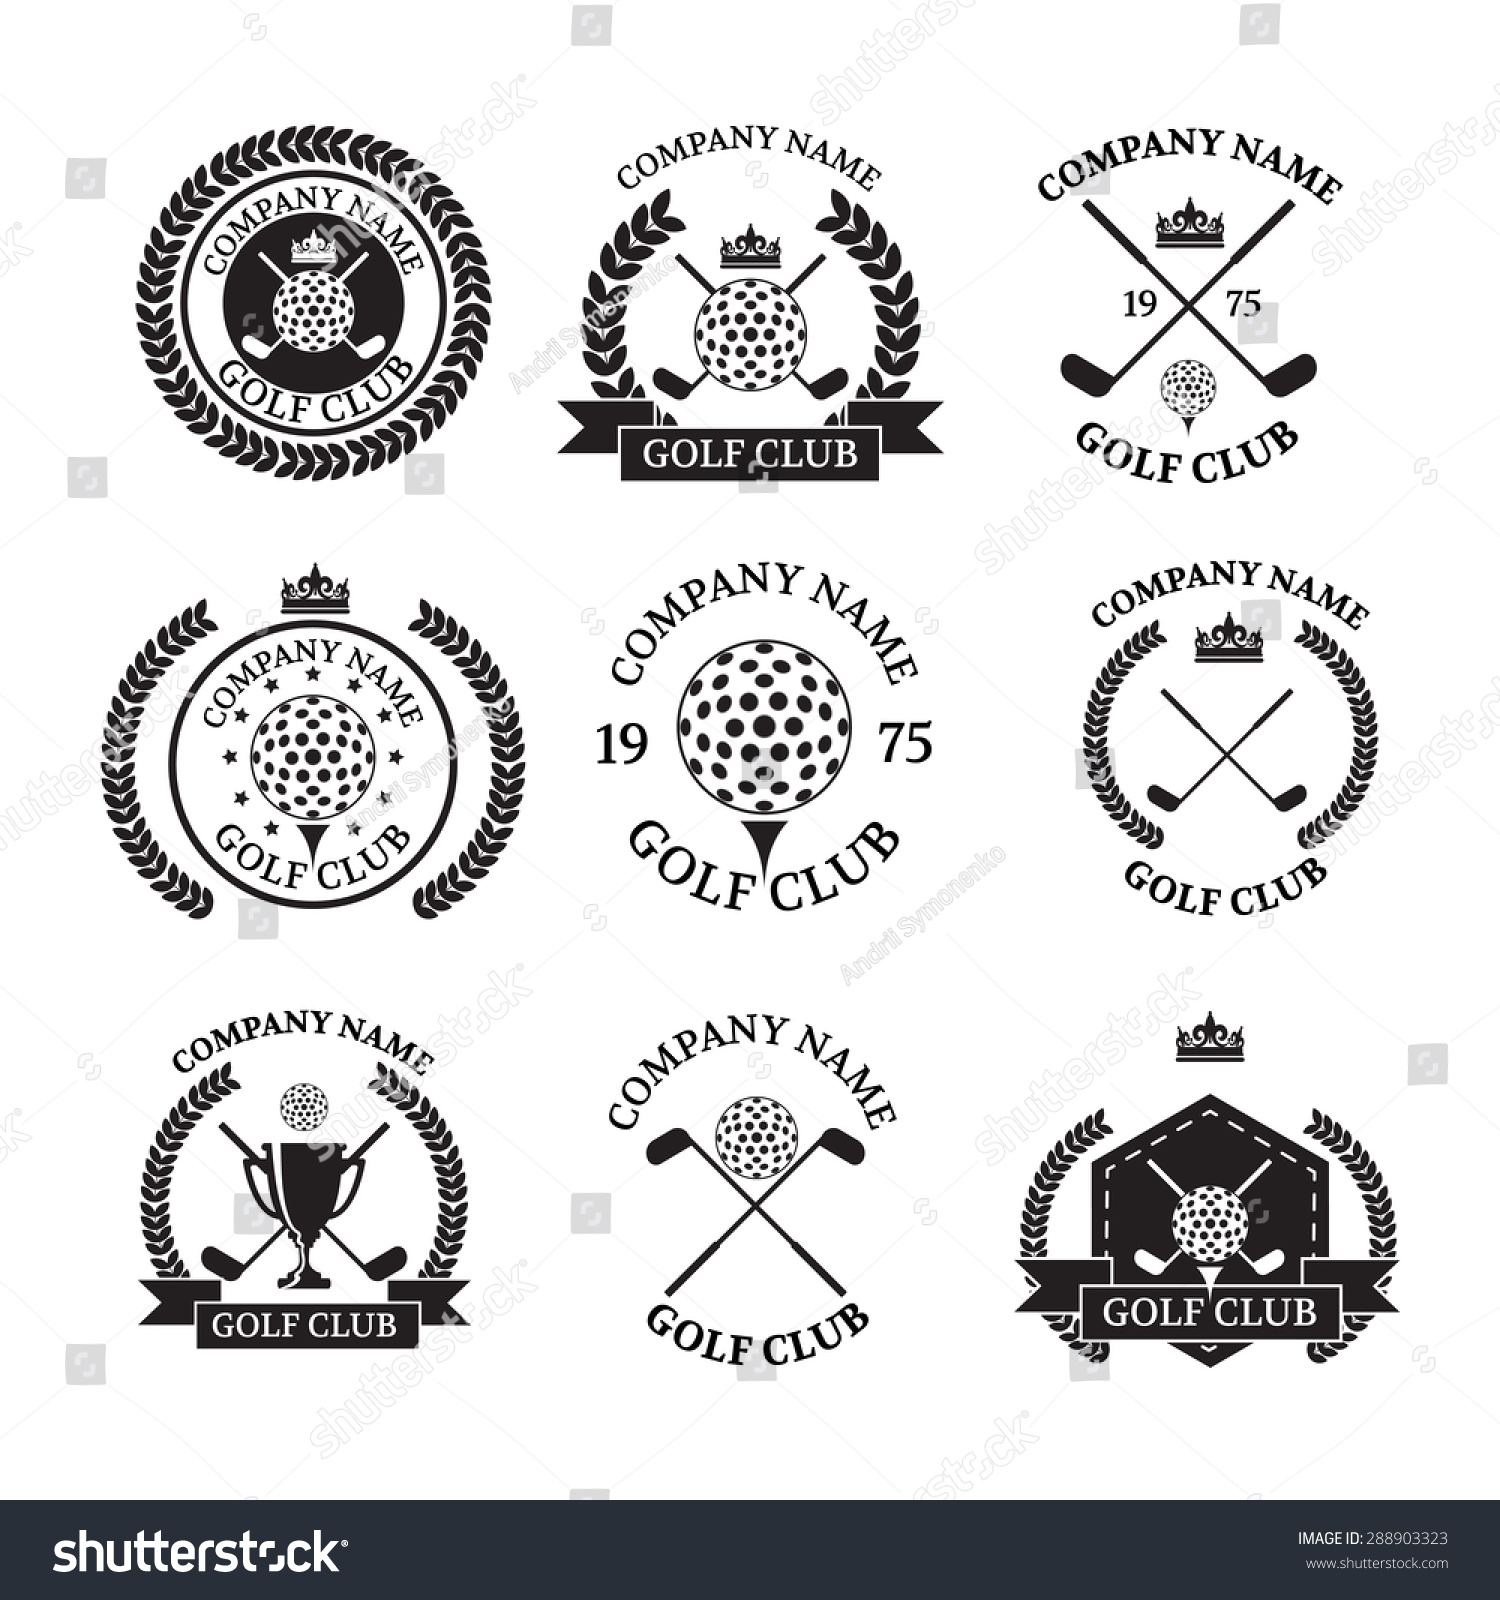 Golf Club Logos Set Of Templates.Vector Logotype Design. - 288903323 ...